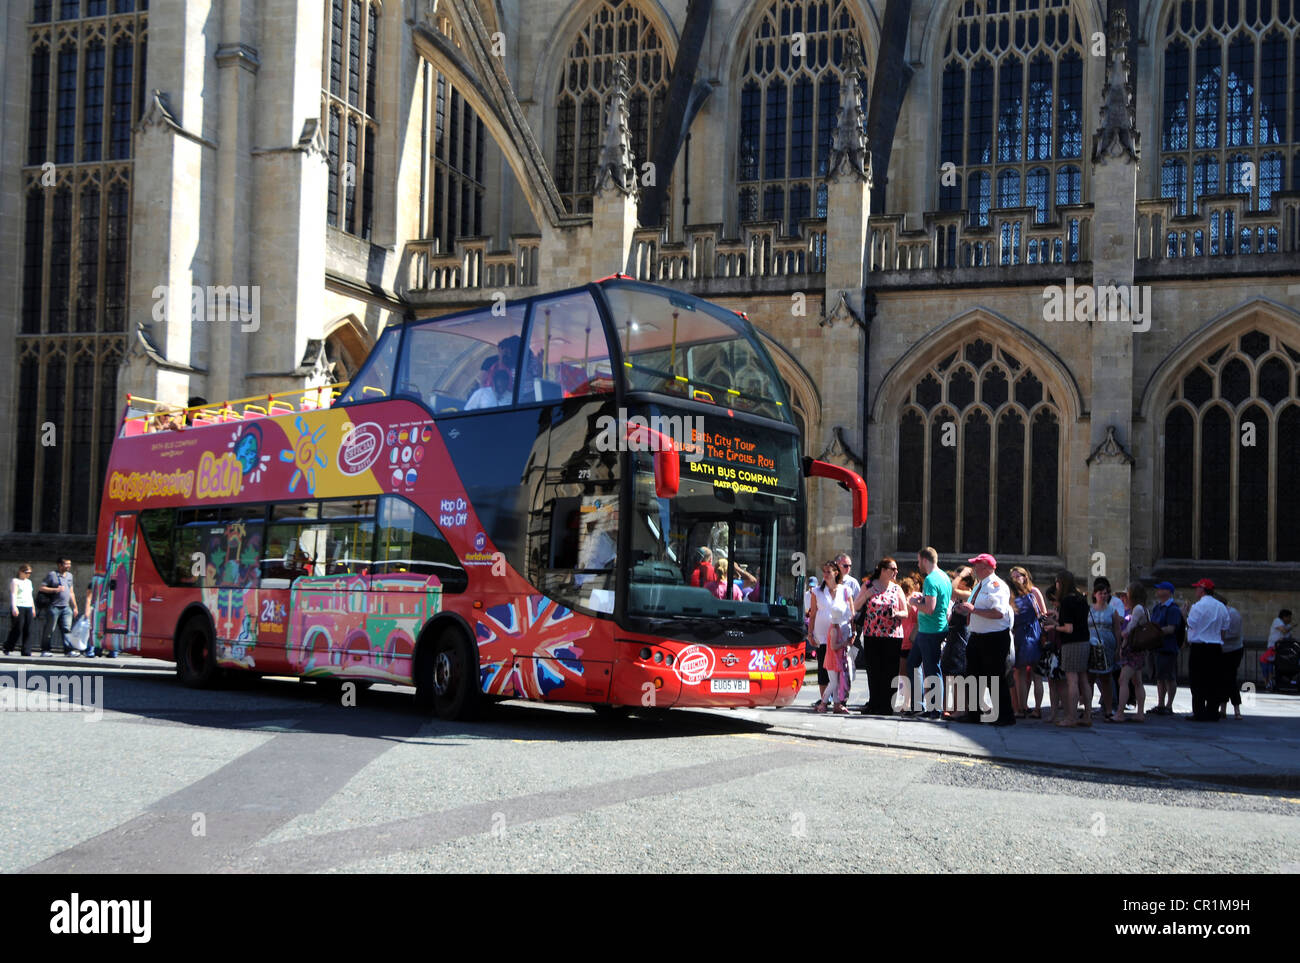 Tourist sightseeing bus, Bath, Somerset, Britain, UK Stock Photo